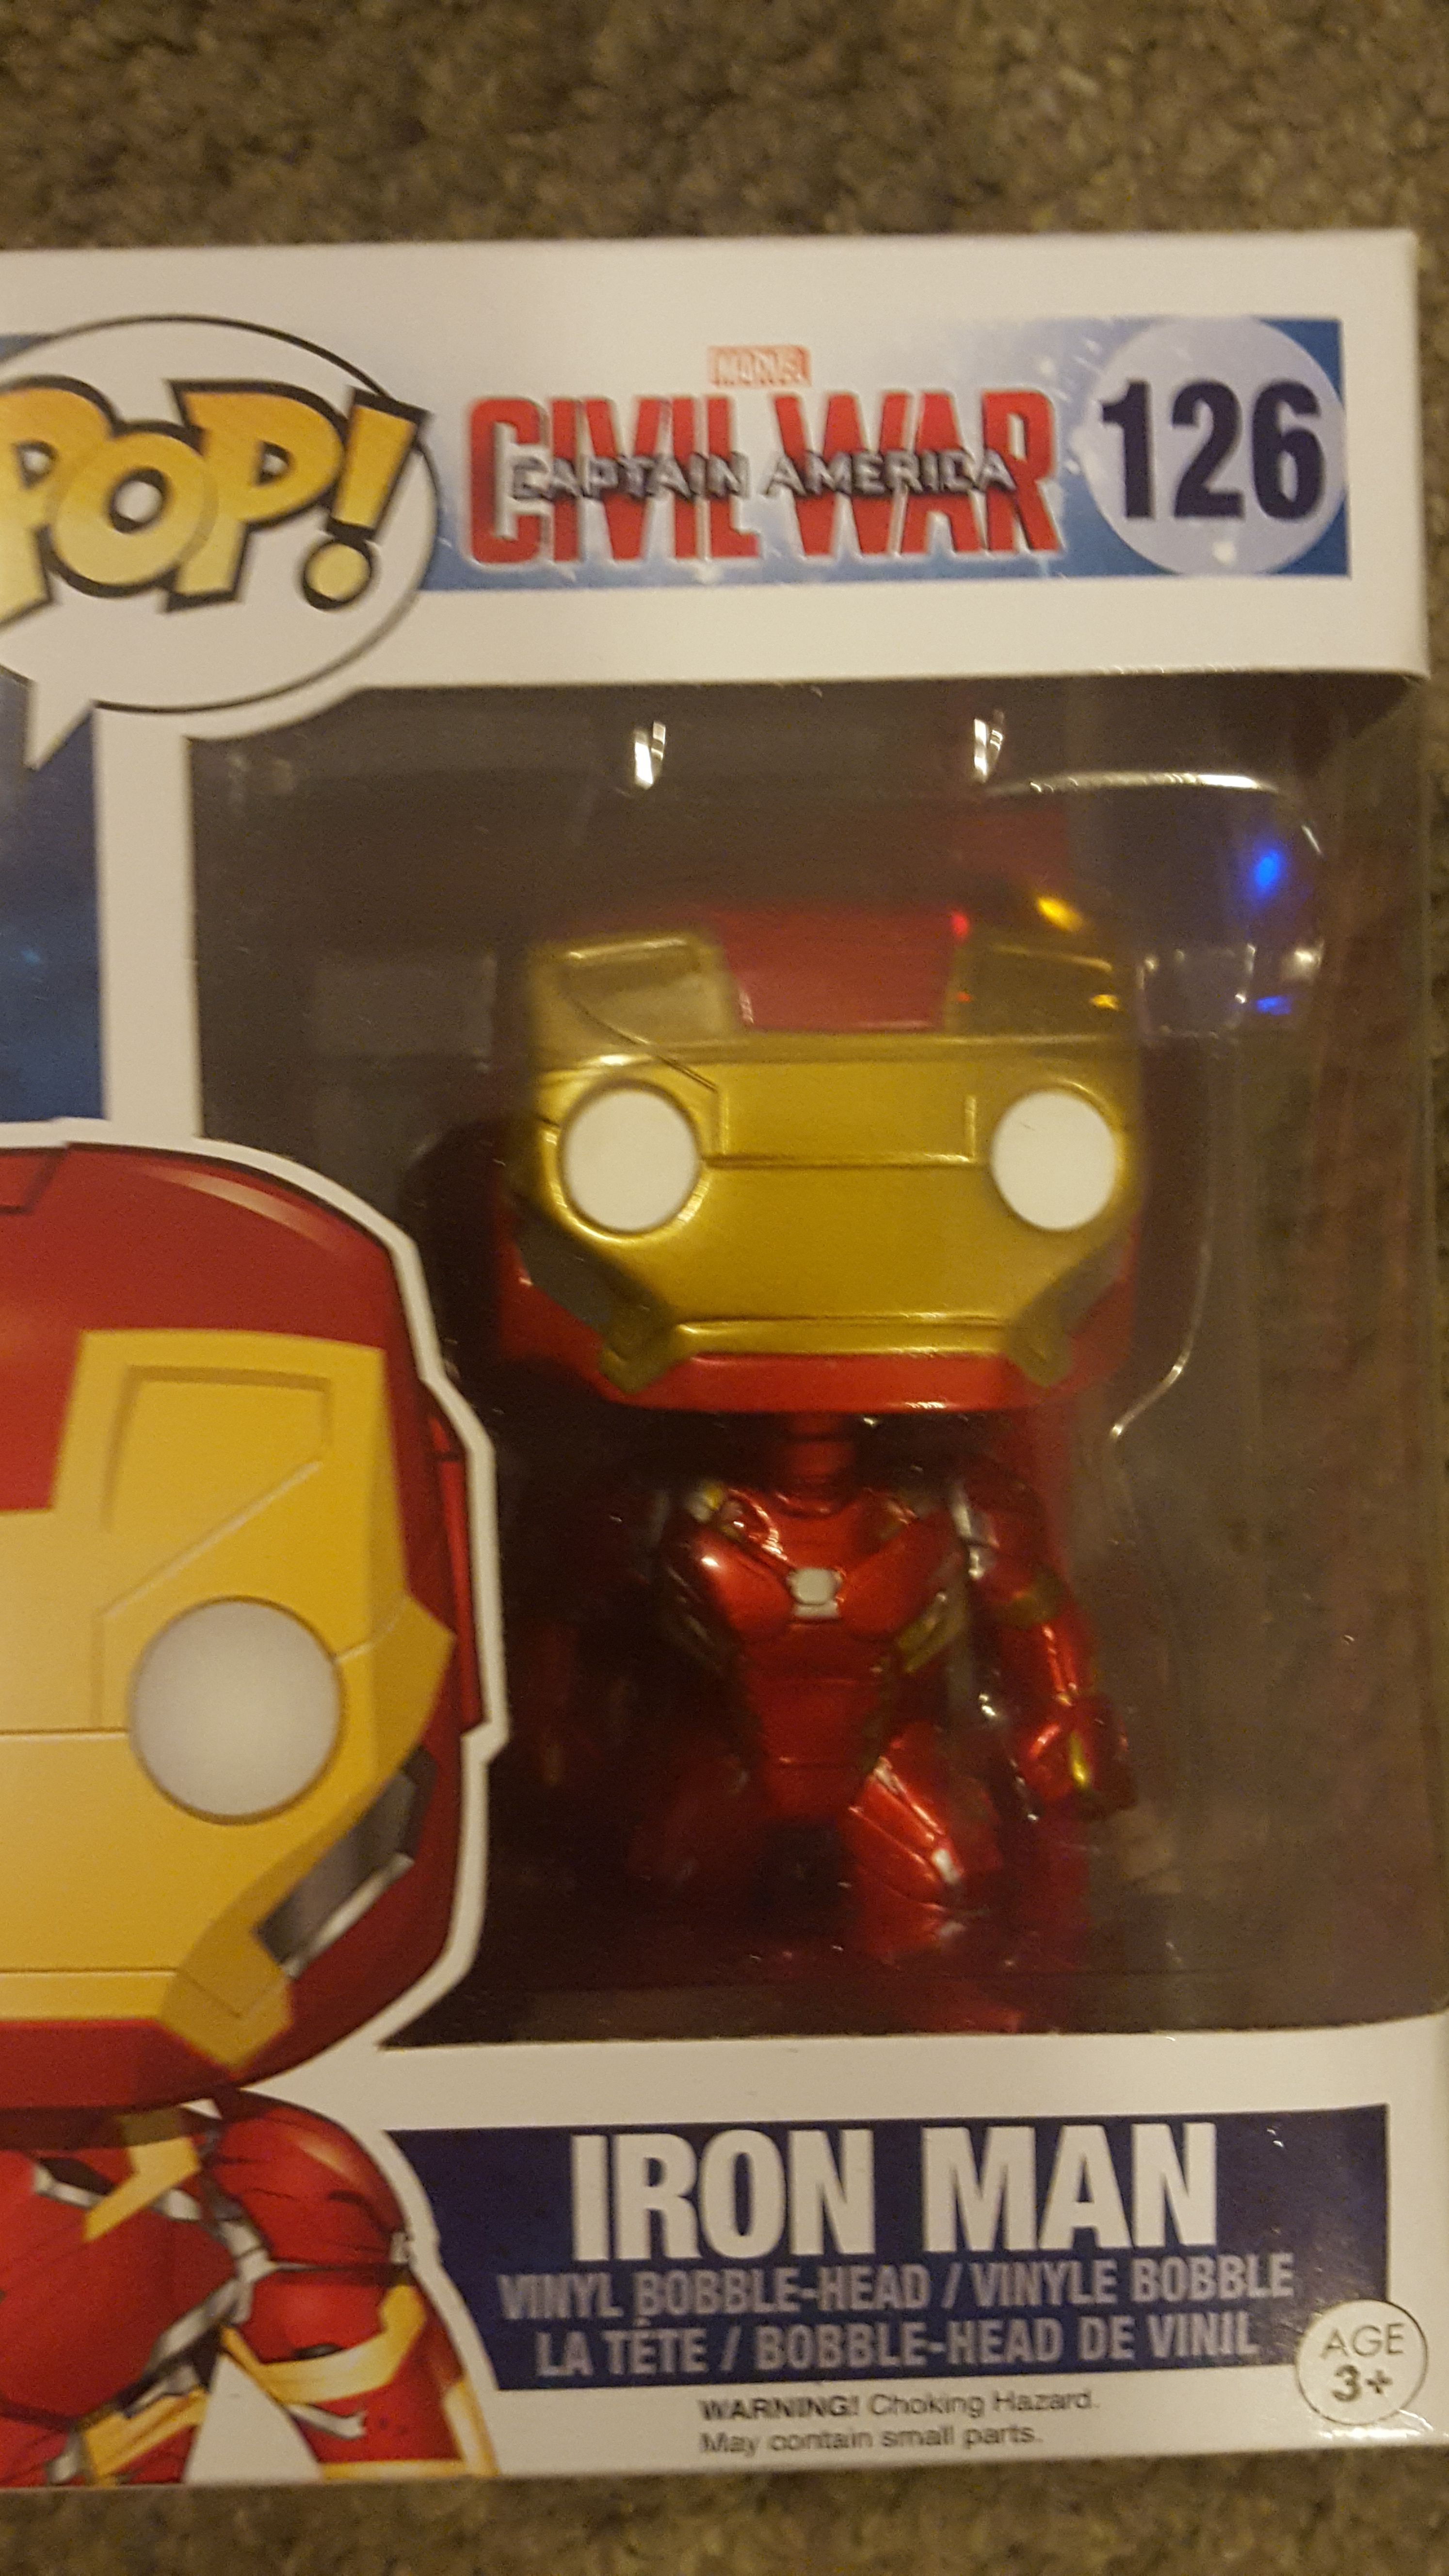 Iron Man Funko Pop